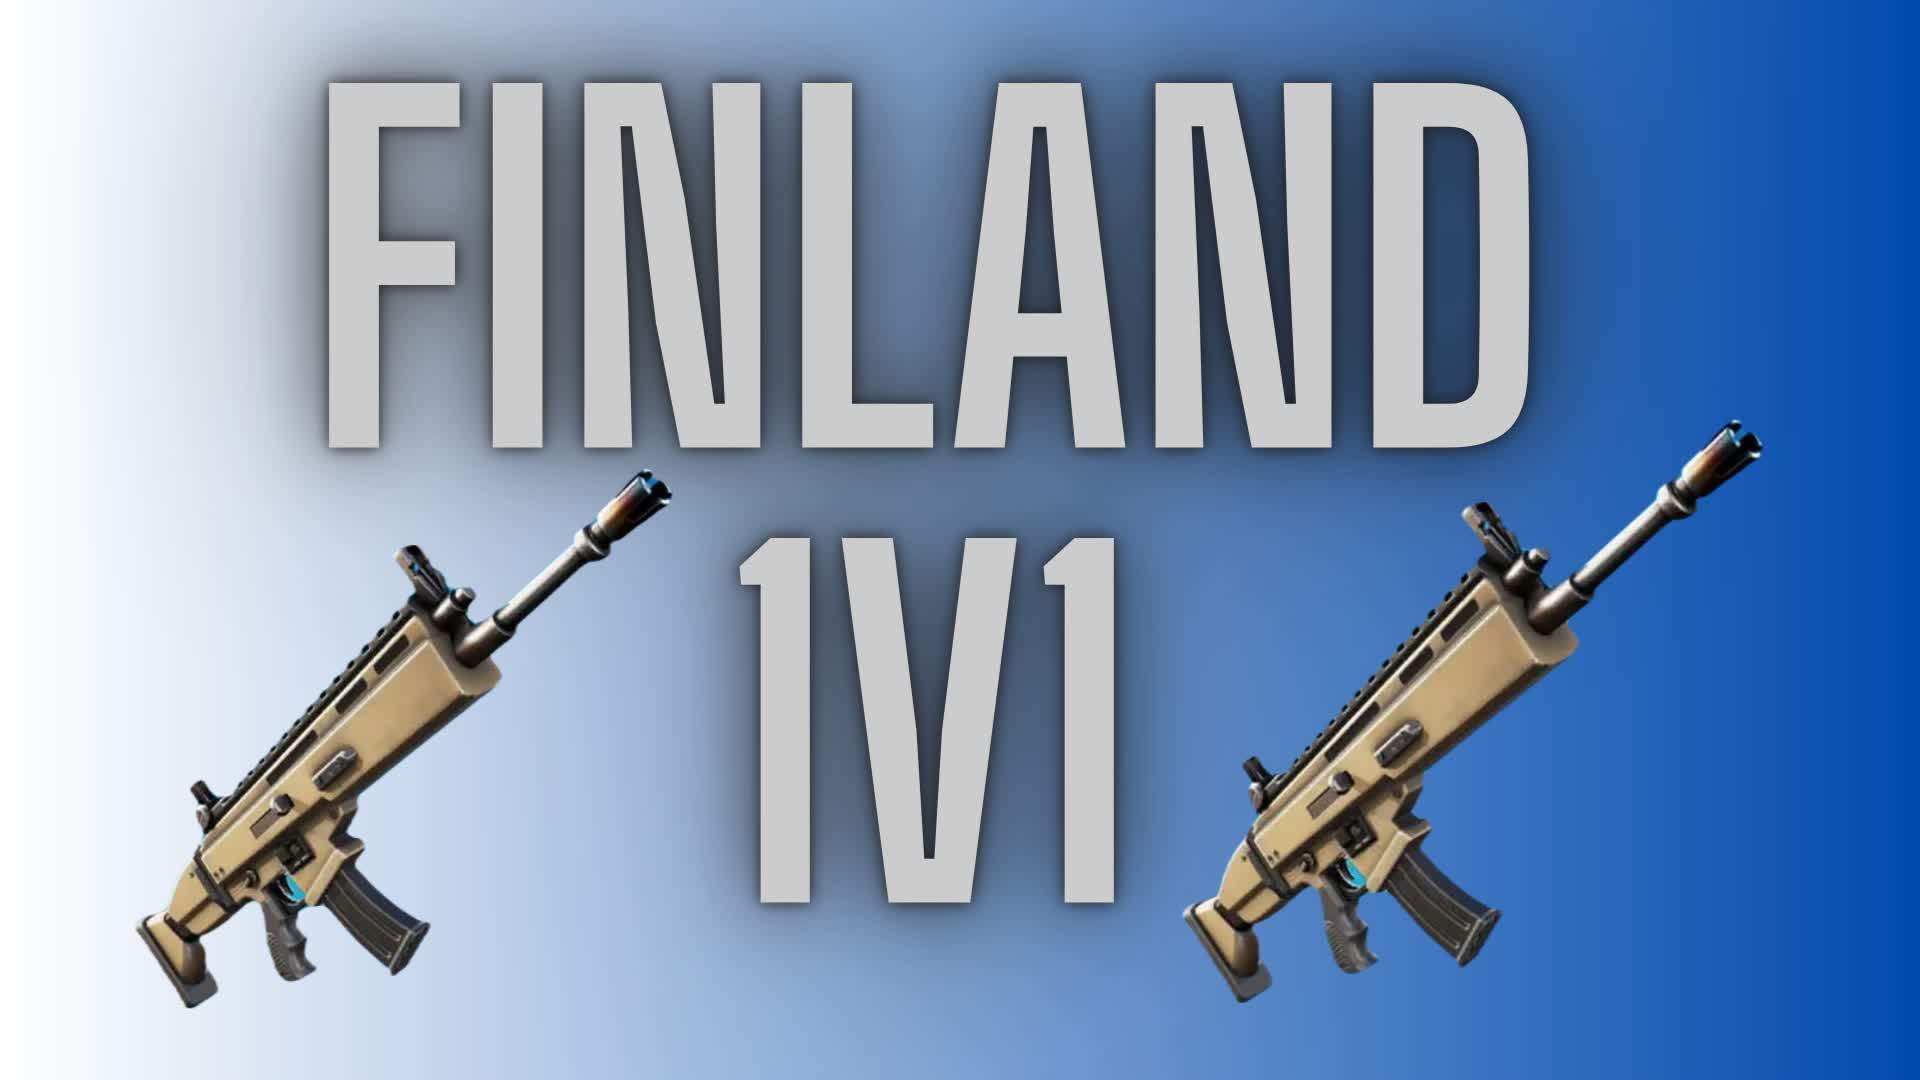 Finland 1v1